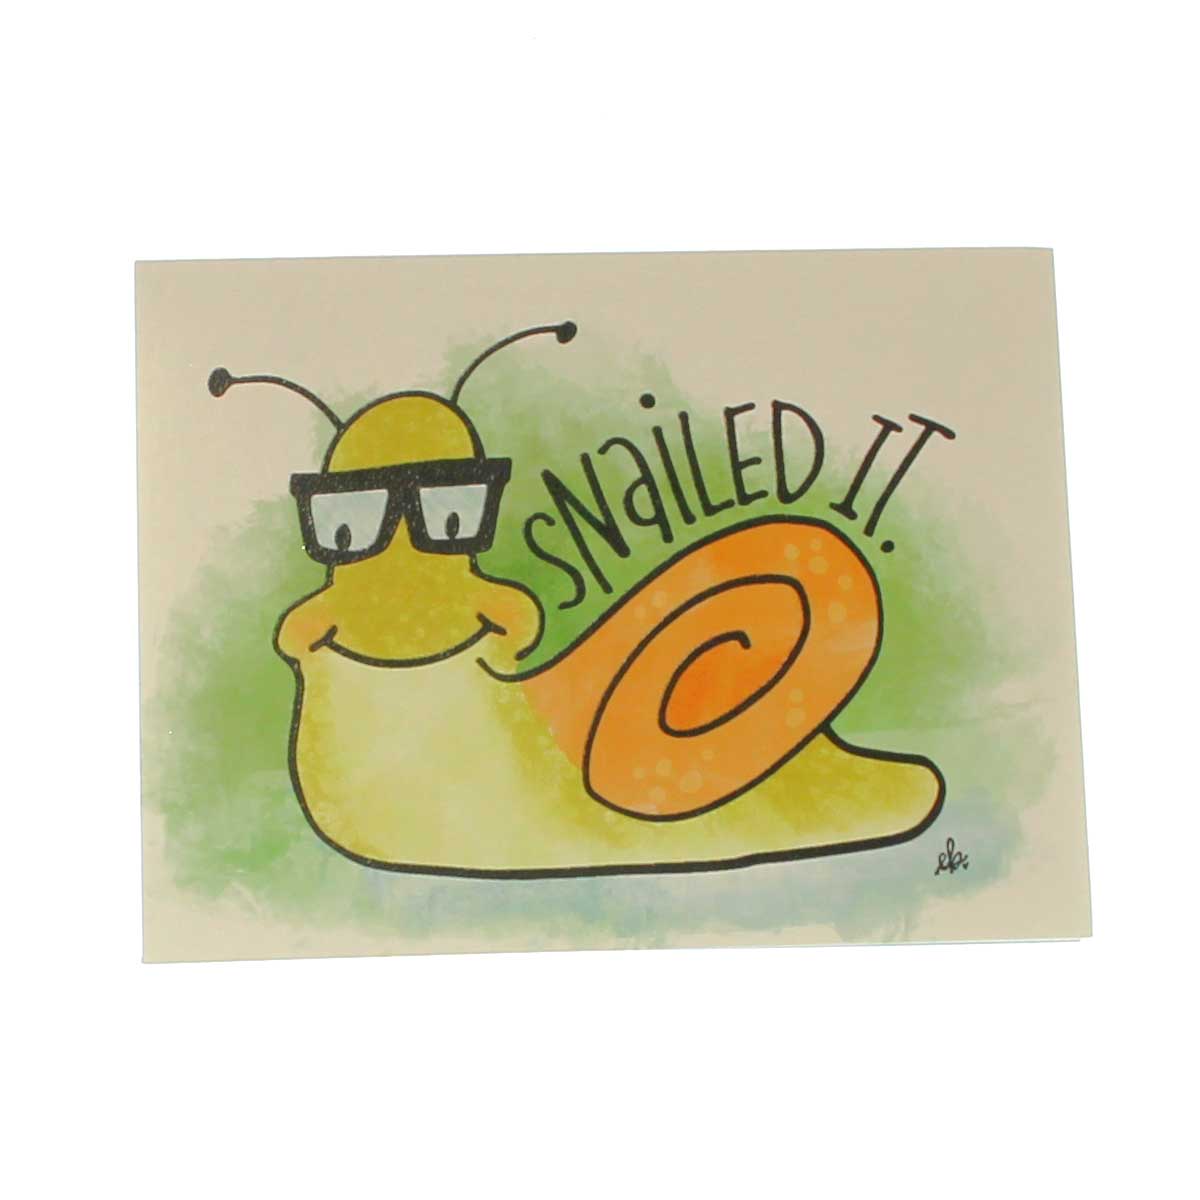 Congratulations Card: Snailed it.